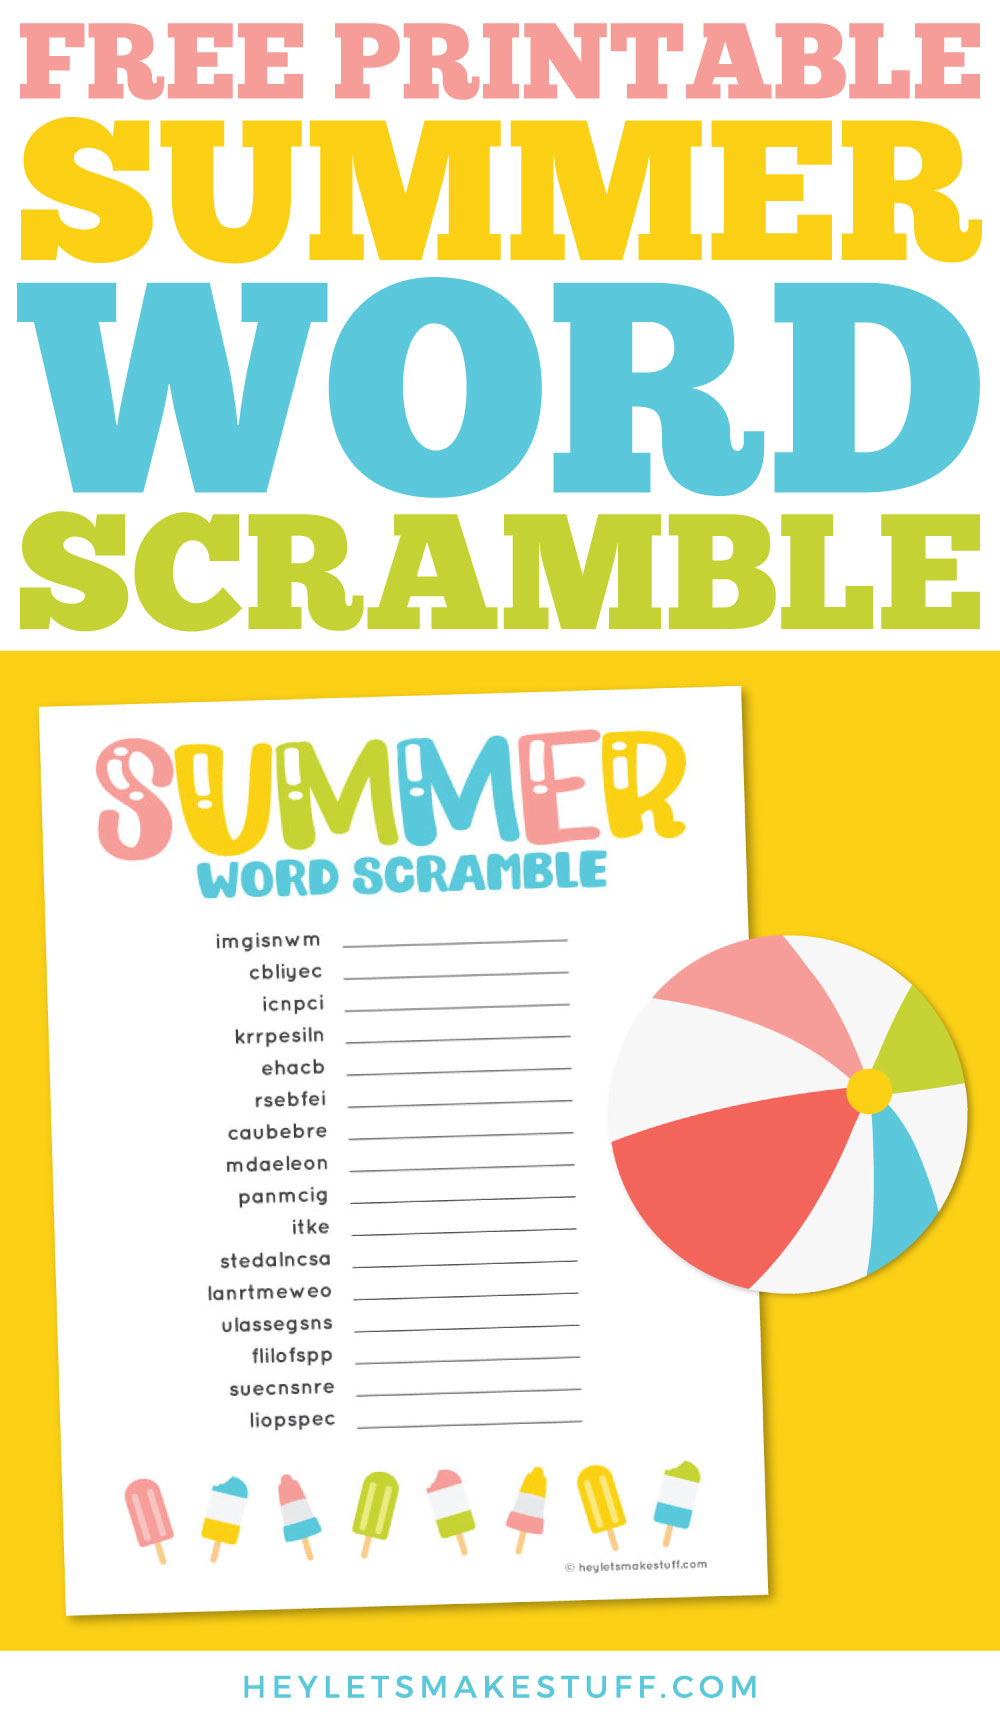 Free Printable Summer Word Scramble + Free Summer Printables